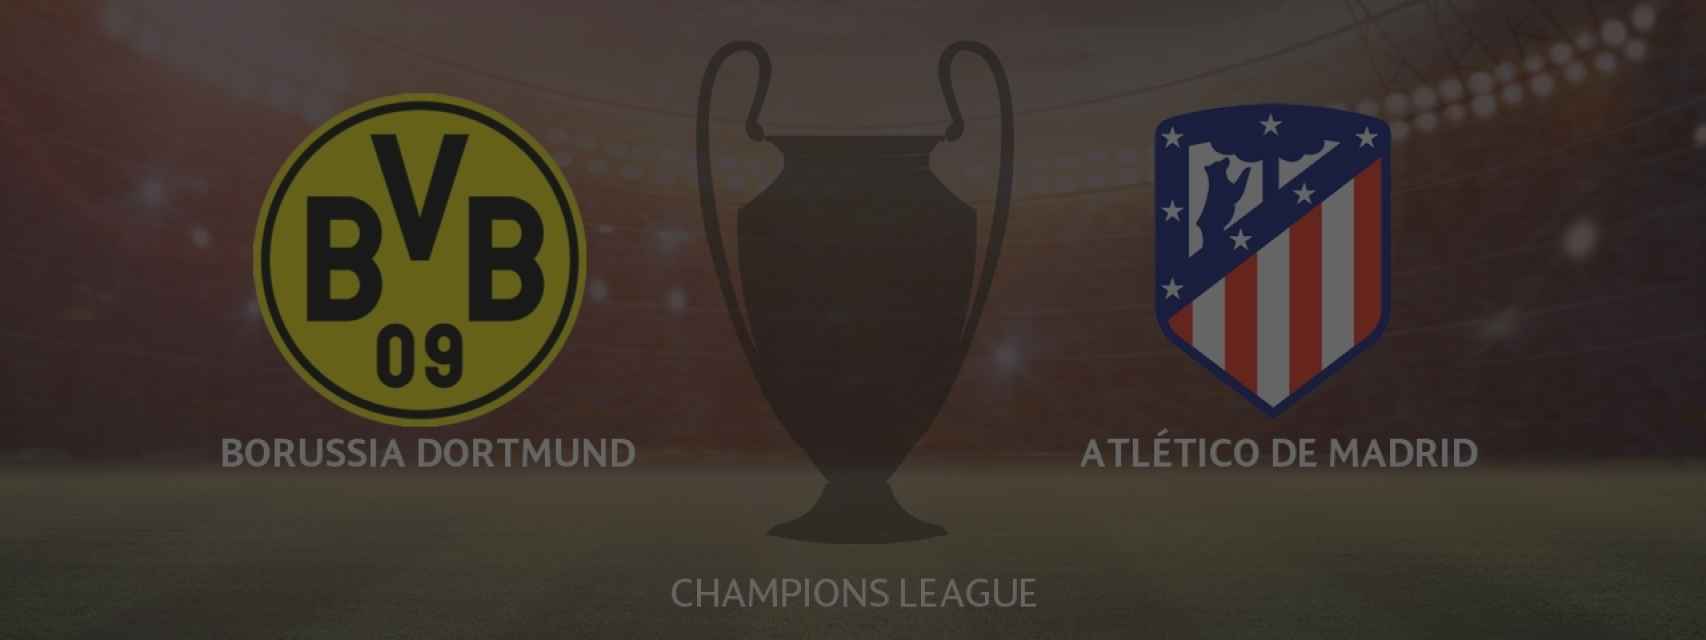 Borussia Dortmund - Atlético Madrid